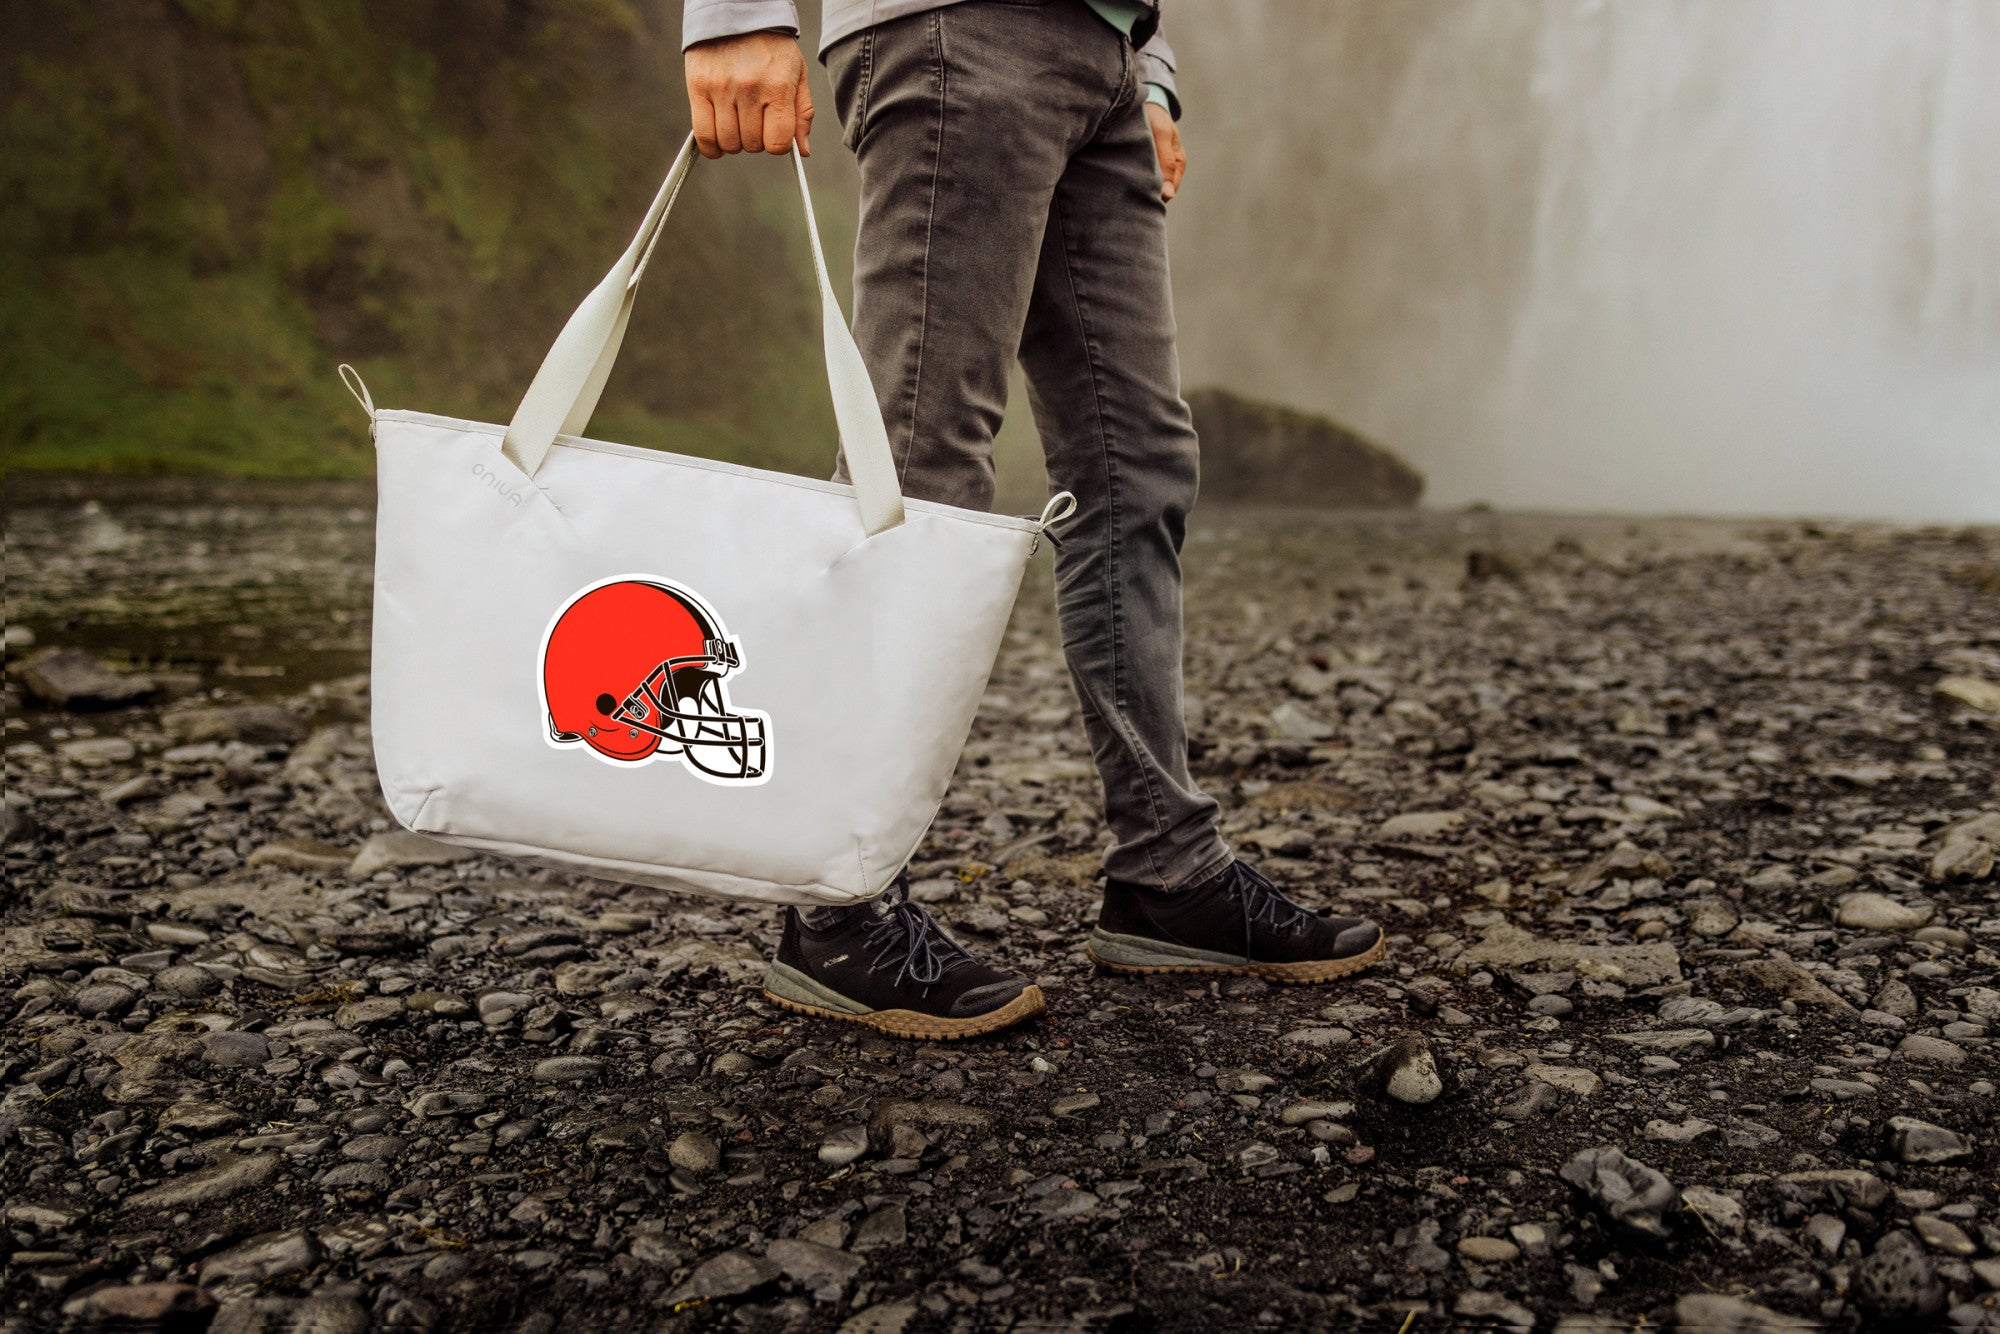 Cleveland Browns - Tarana Cooler Tote Bag